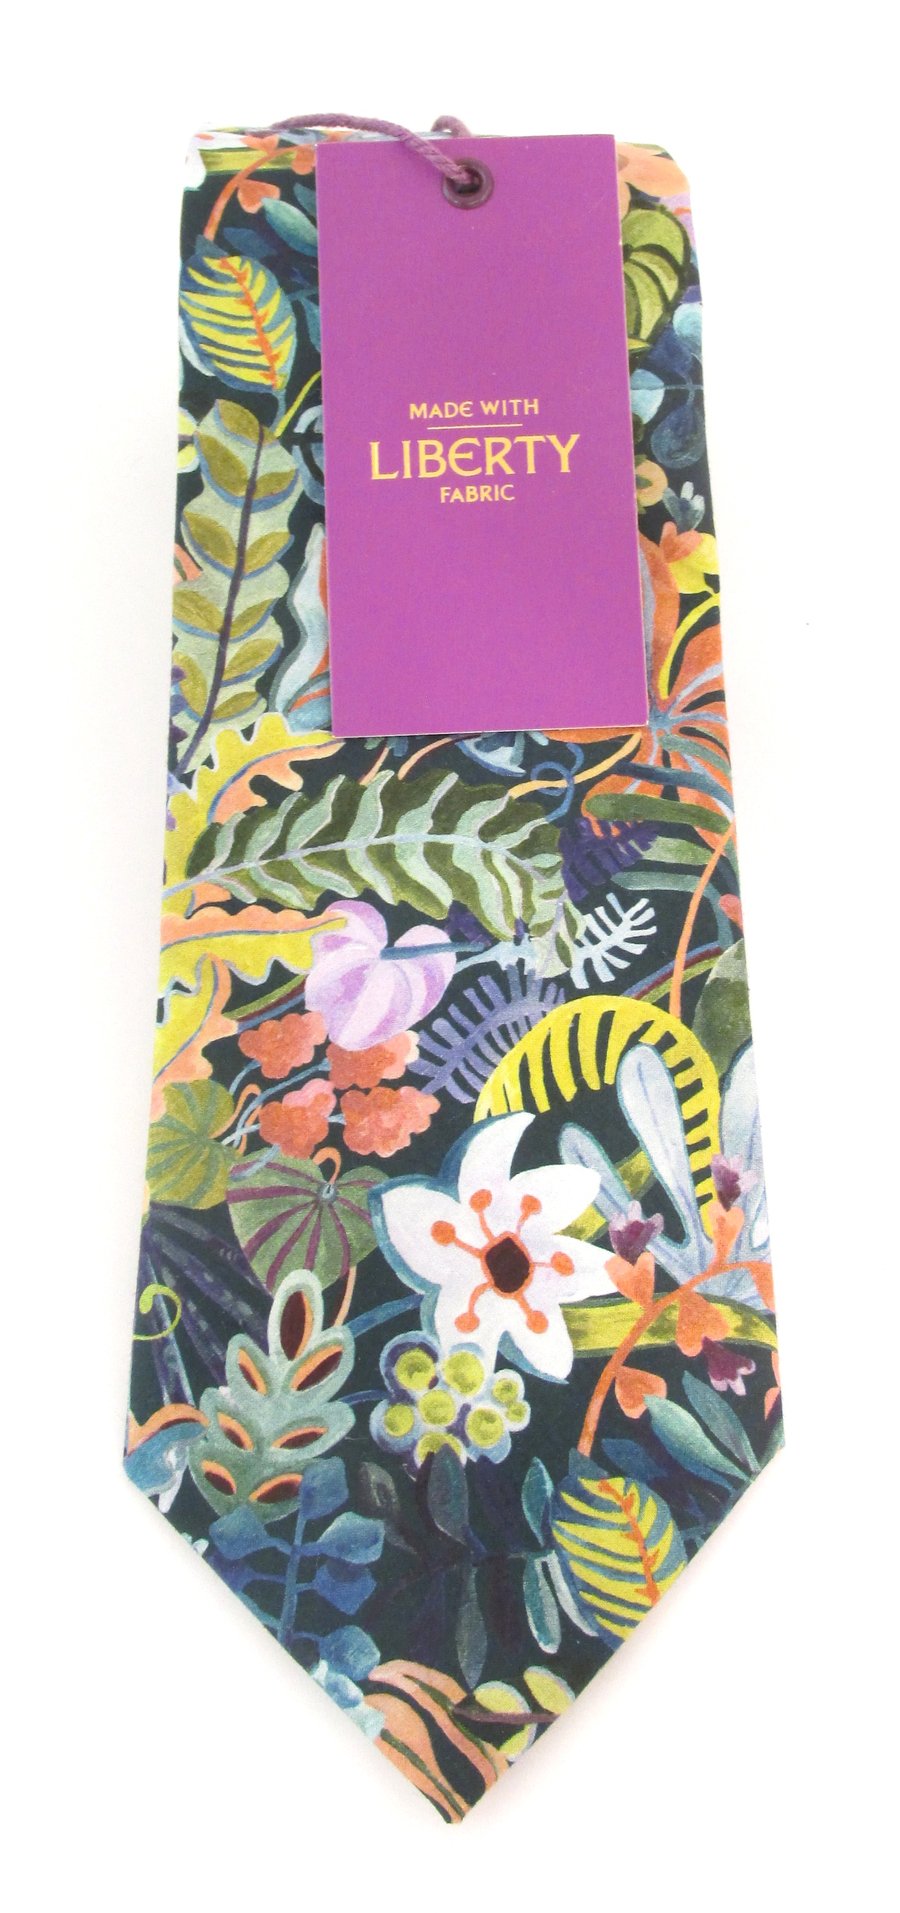 Jungle Liberty fabric tie by Van Buck